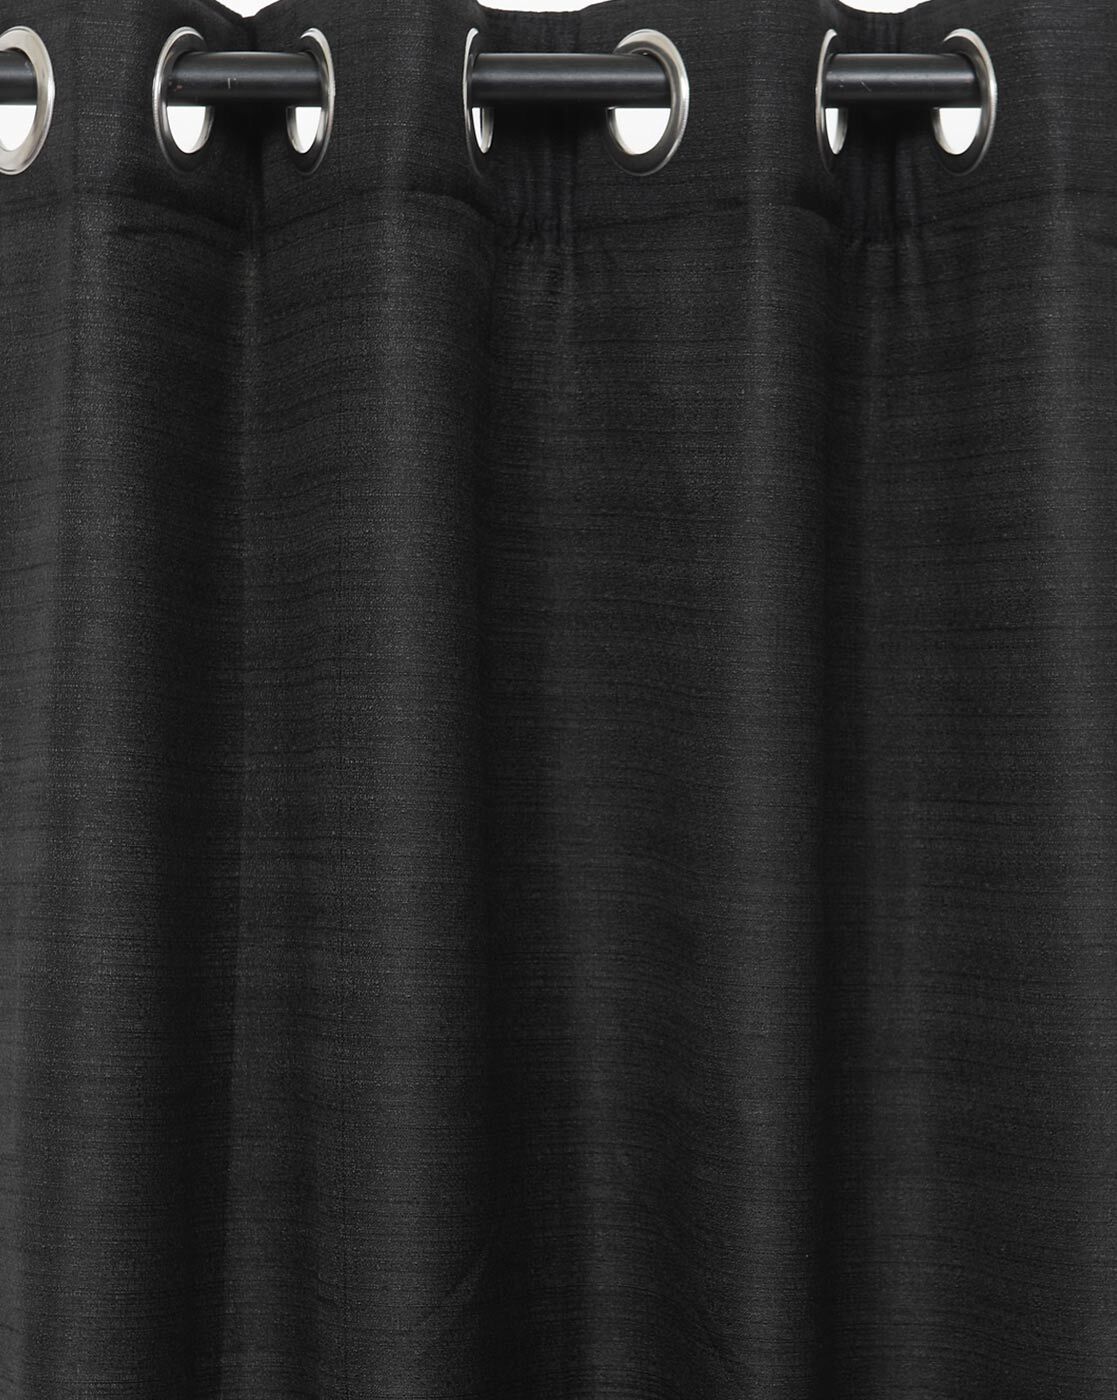 Black String Curtain in Kolkata at best price by Rashmishree